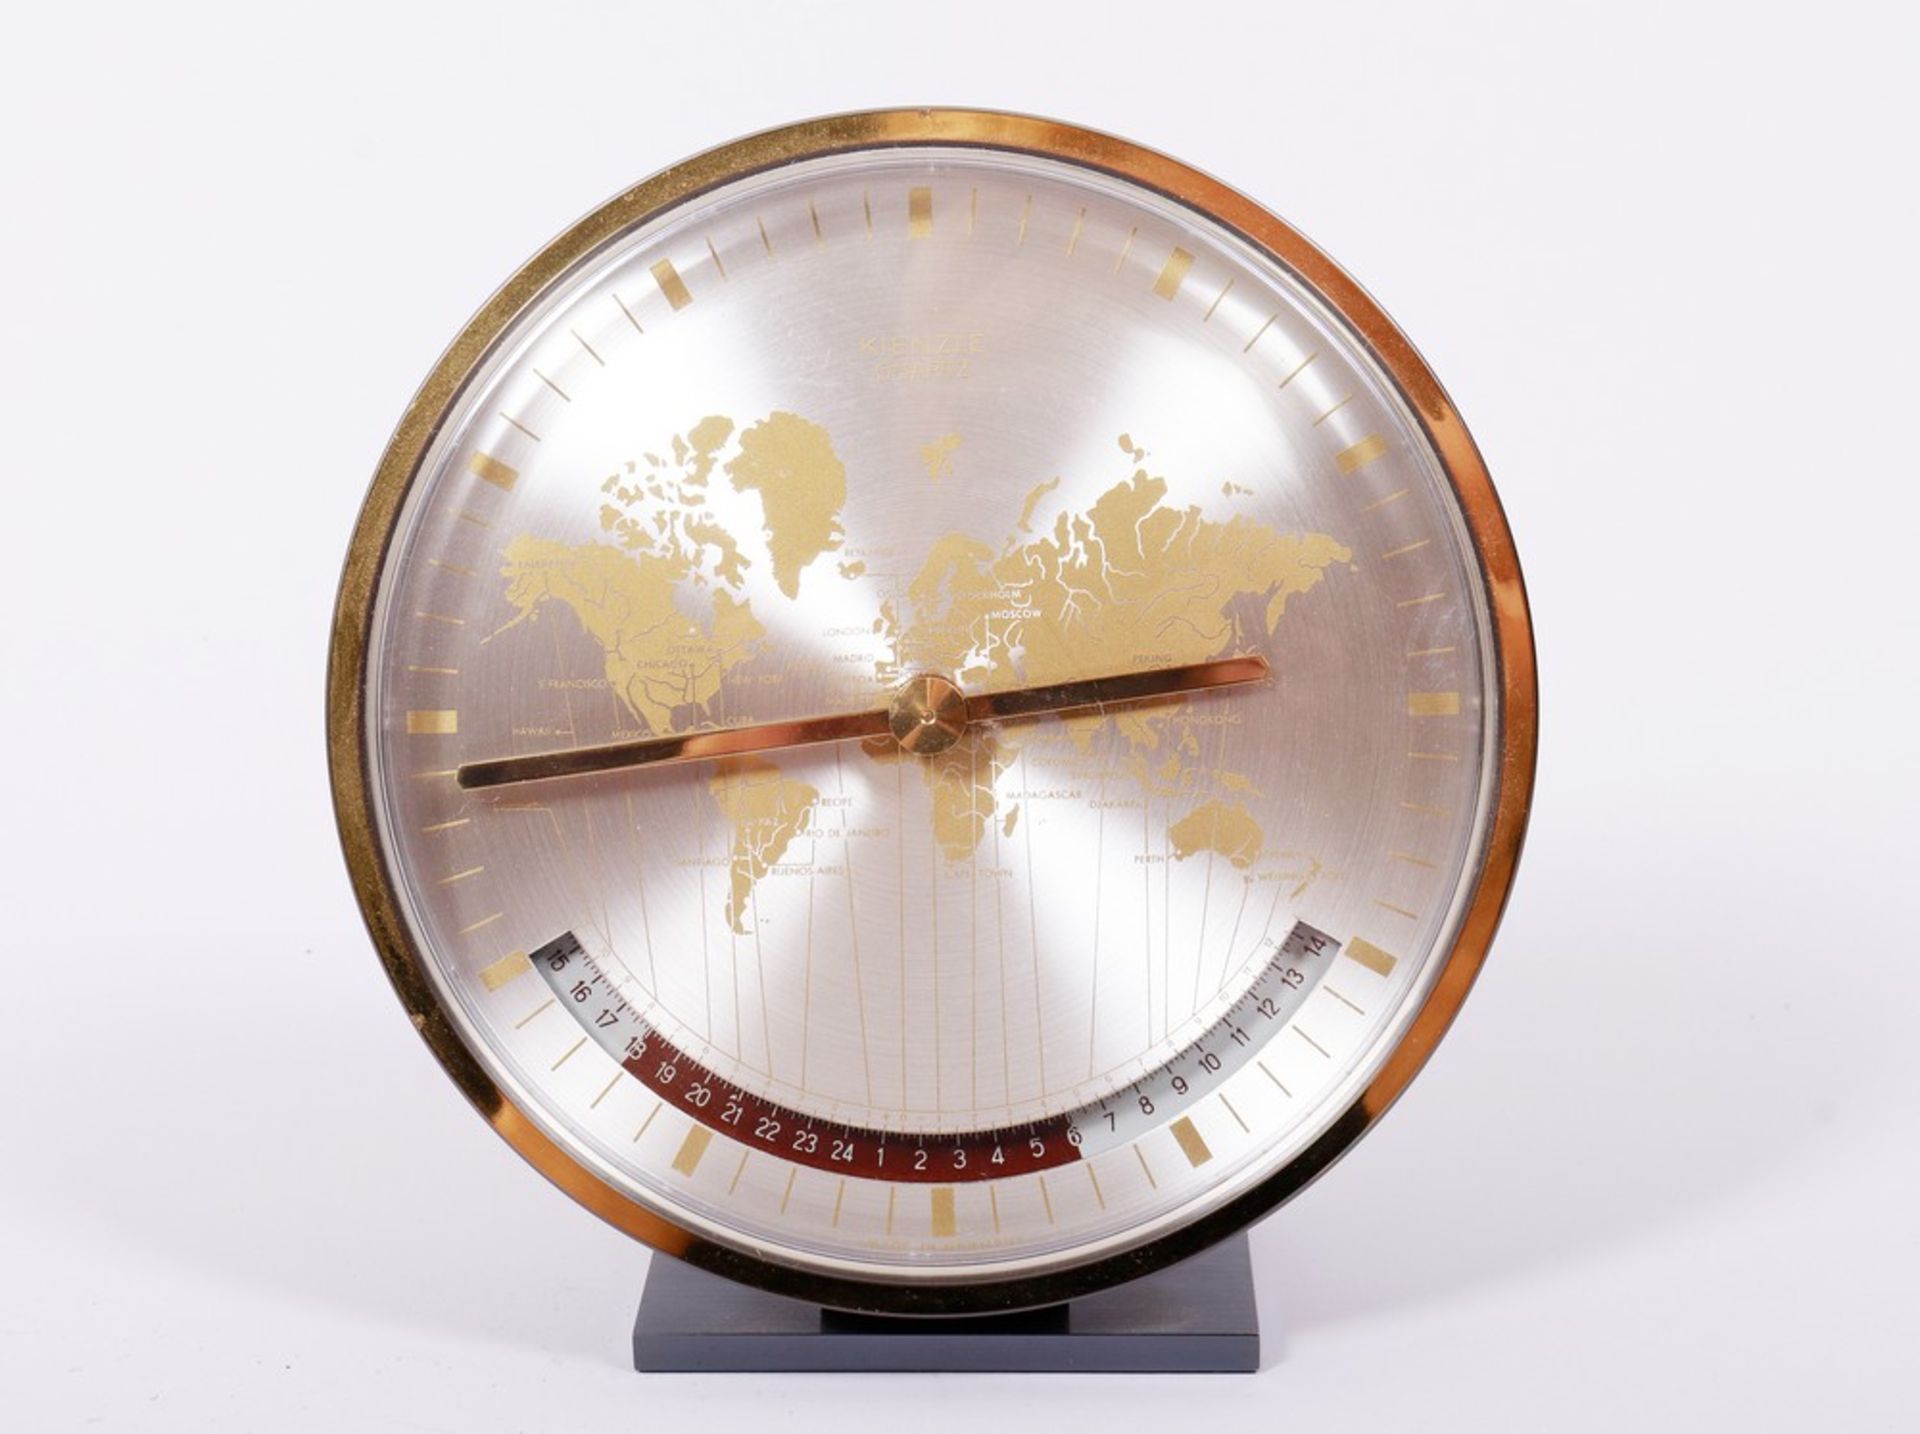 Small world time clock, Kienzle, 1960s